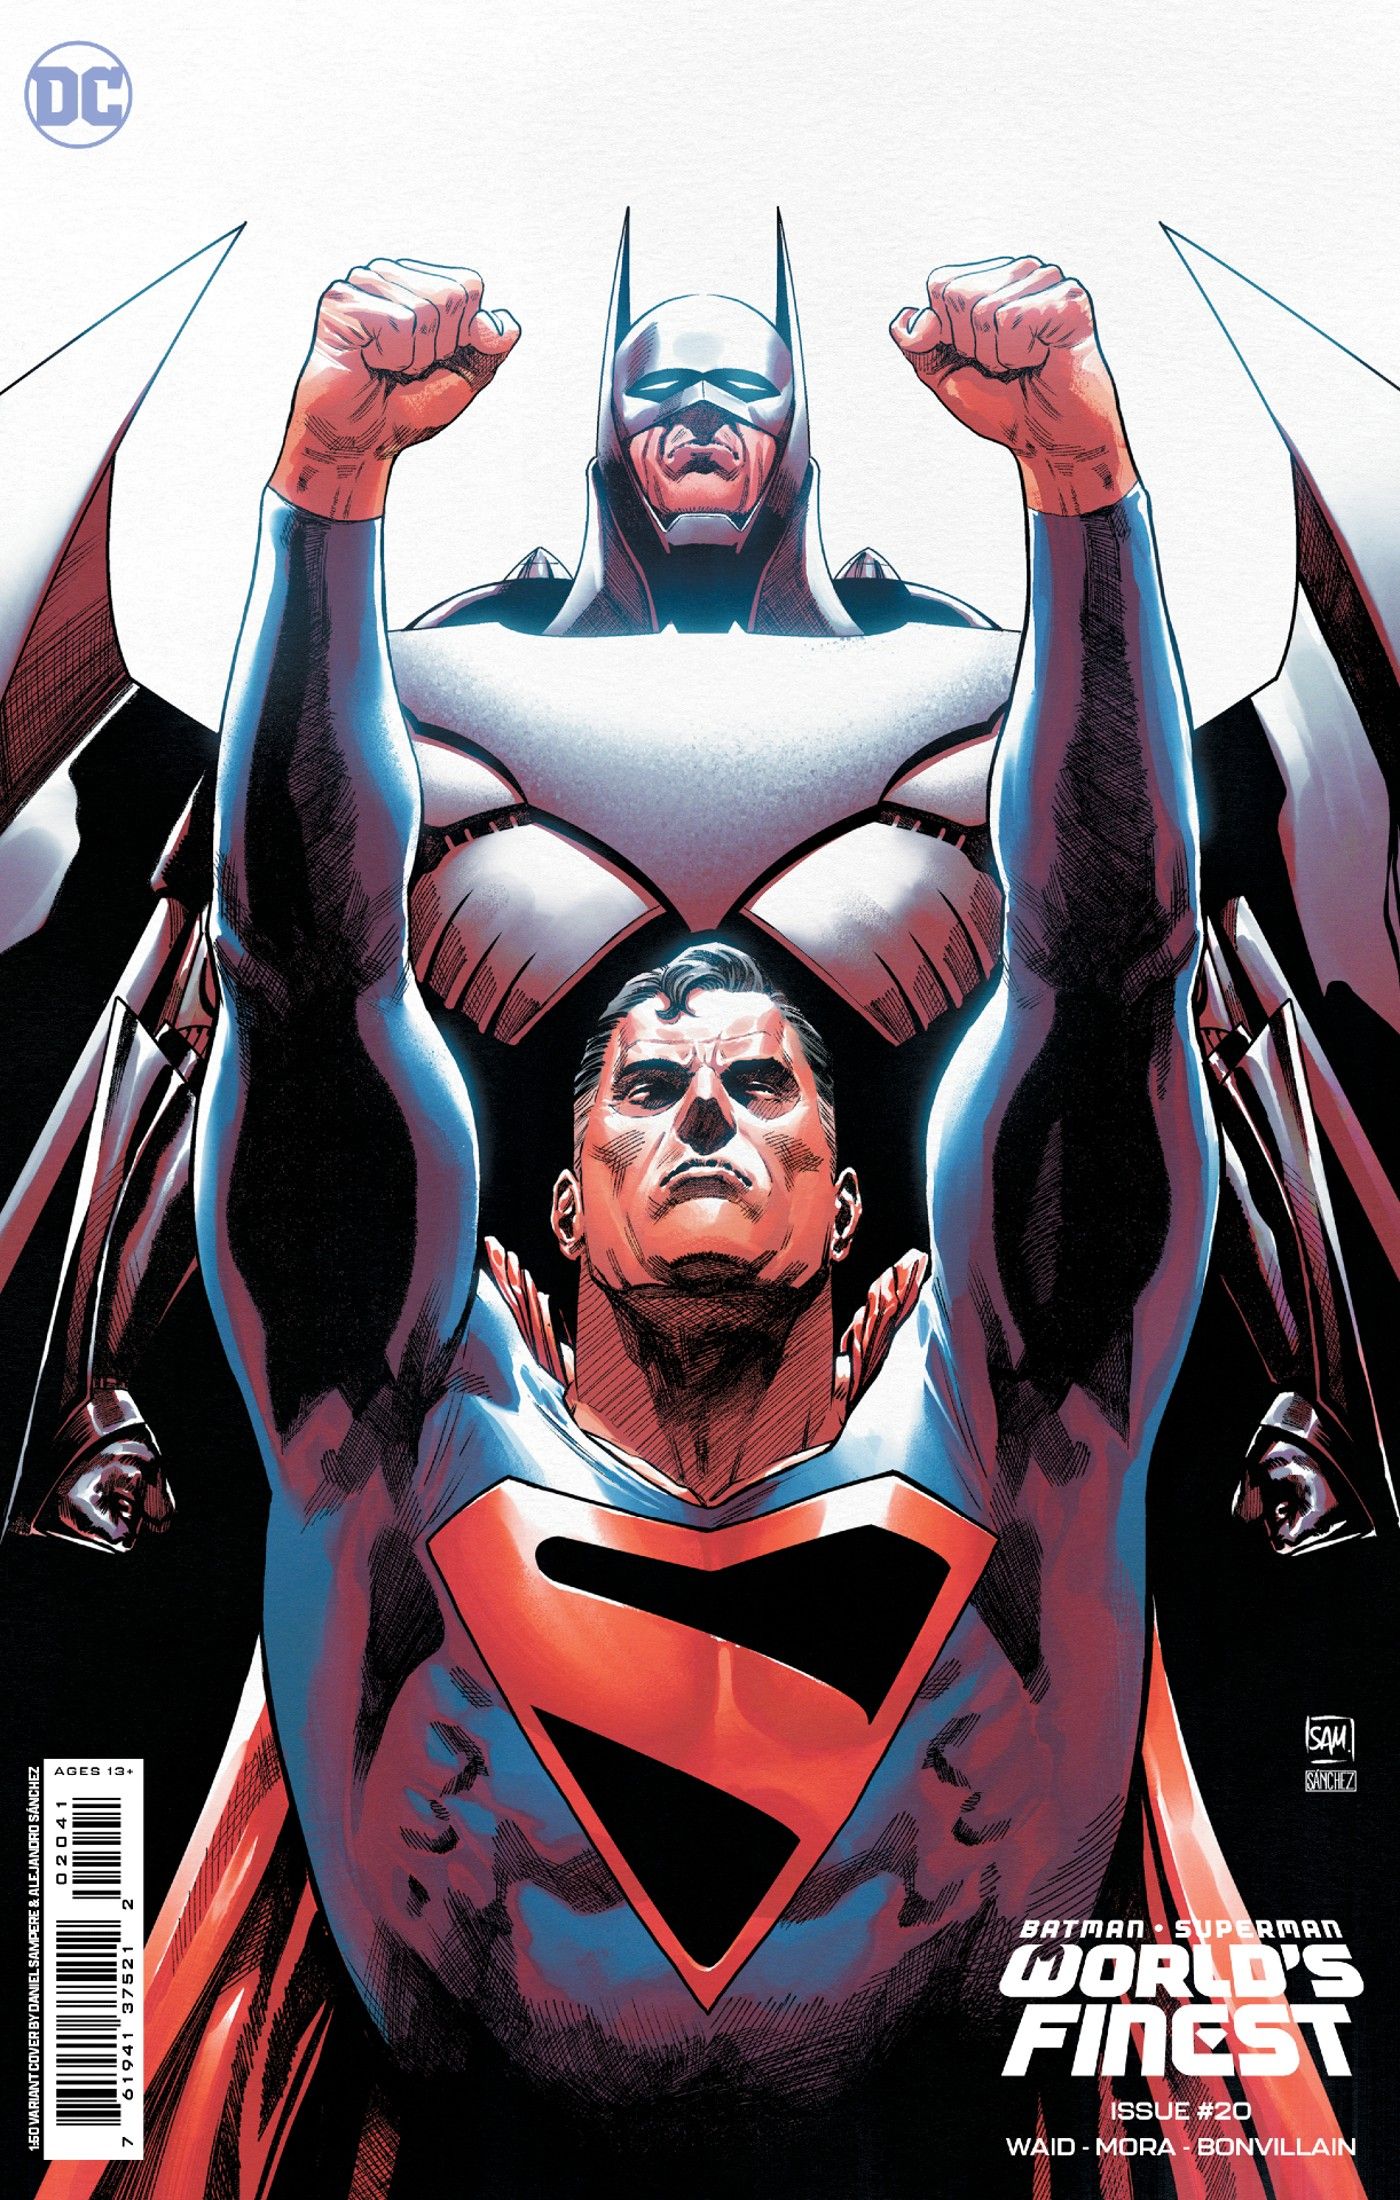 Batman Superman World's Finest #20 featuring Kingdom Come cover art-4